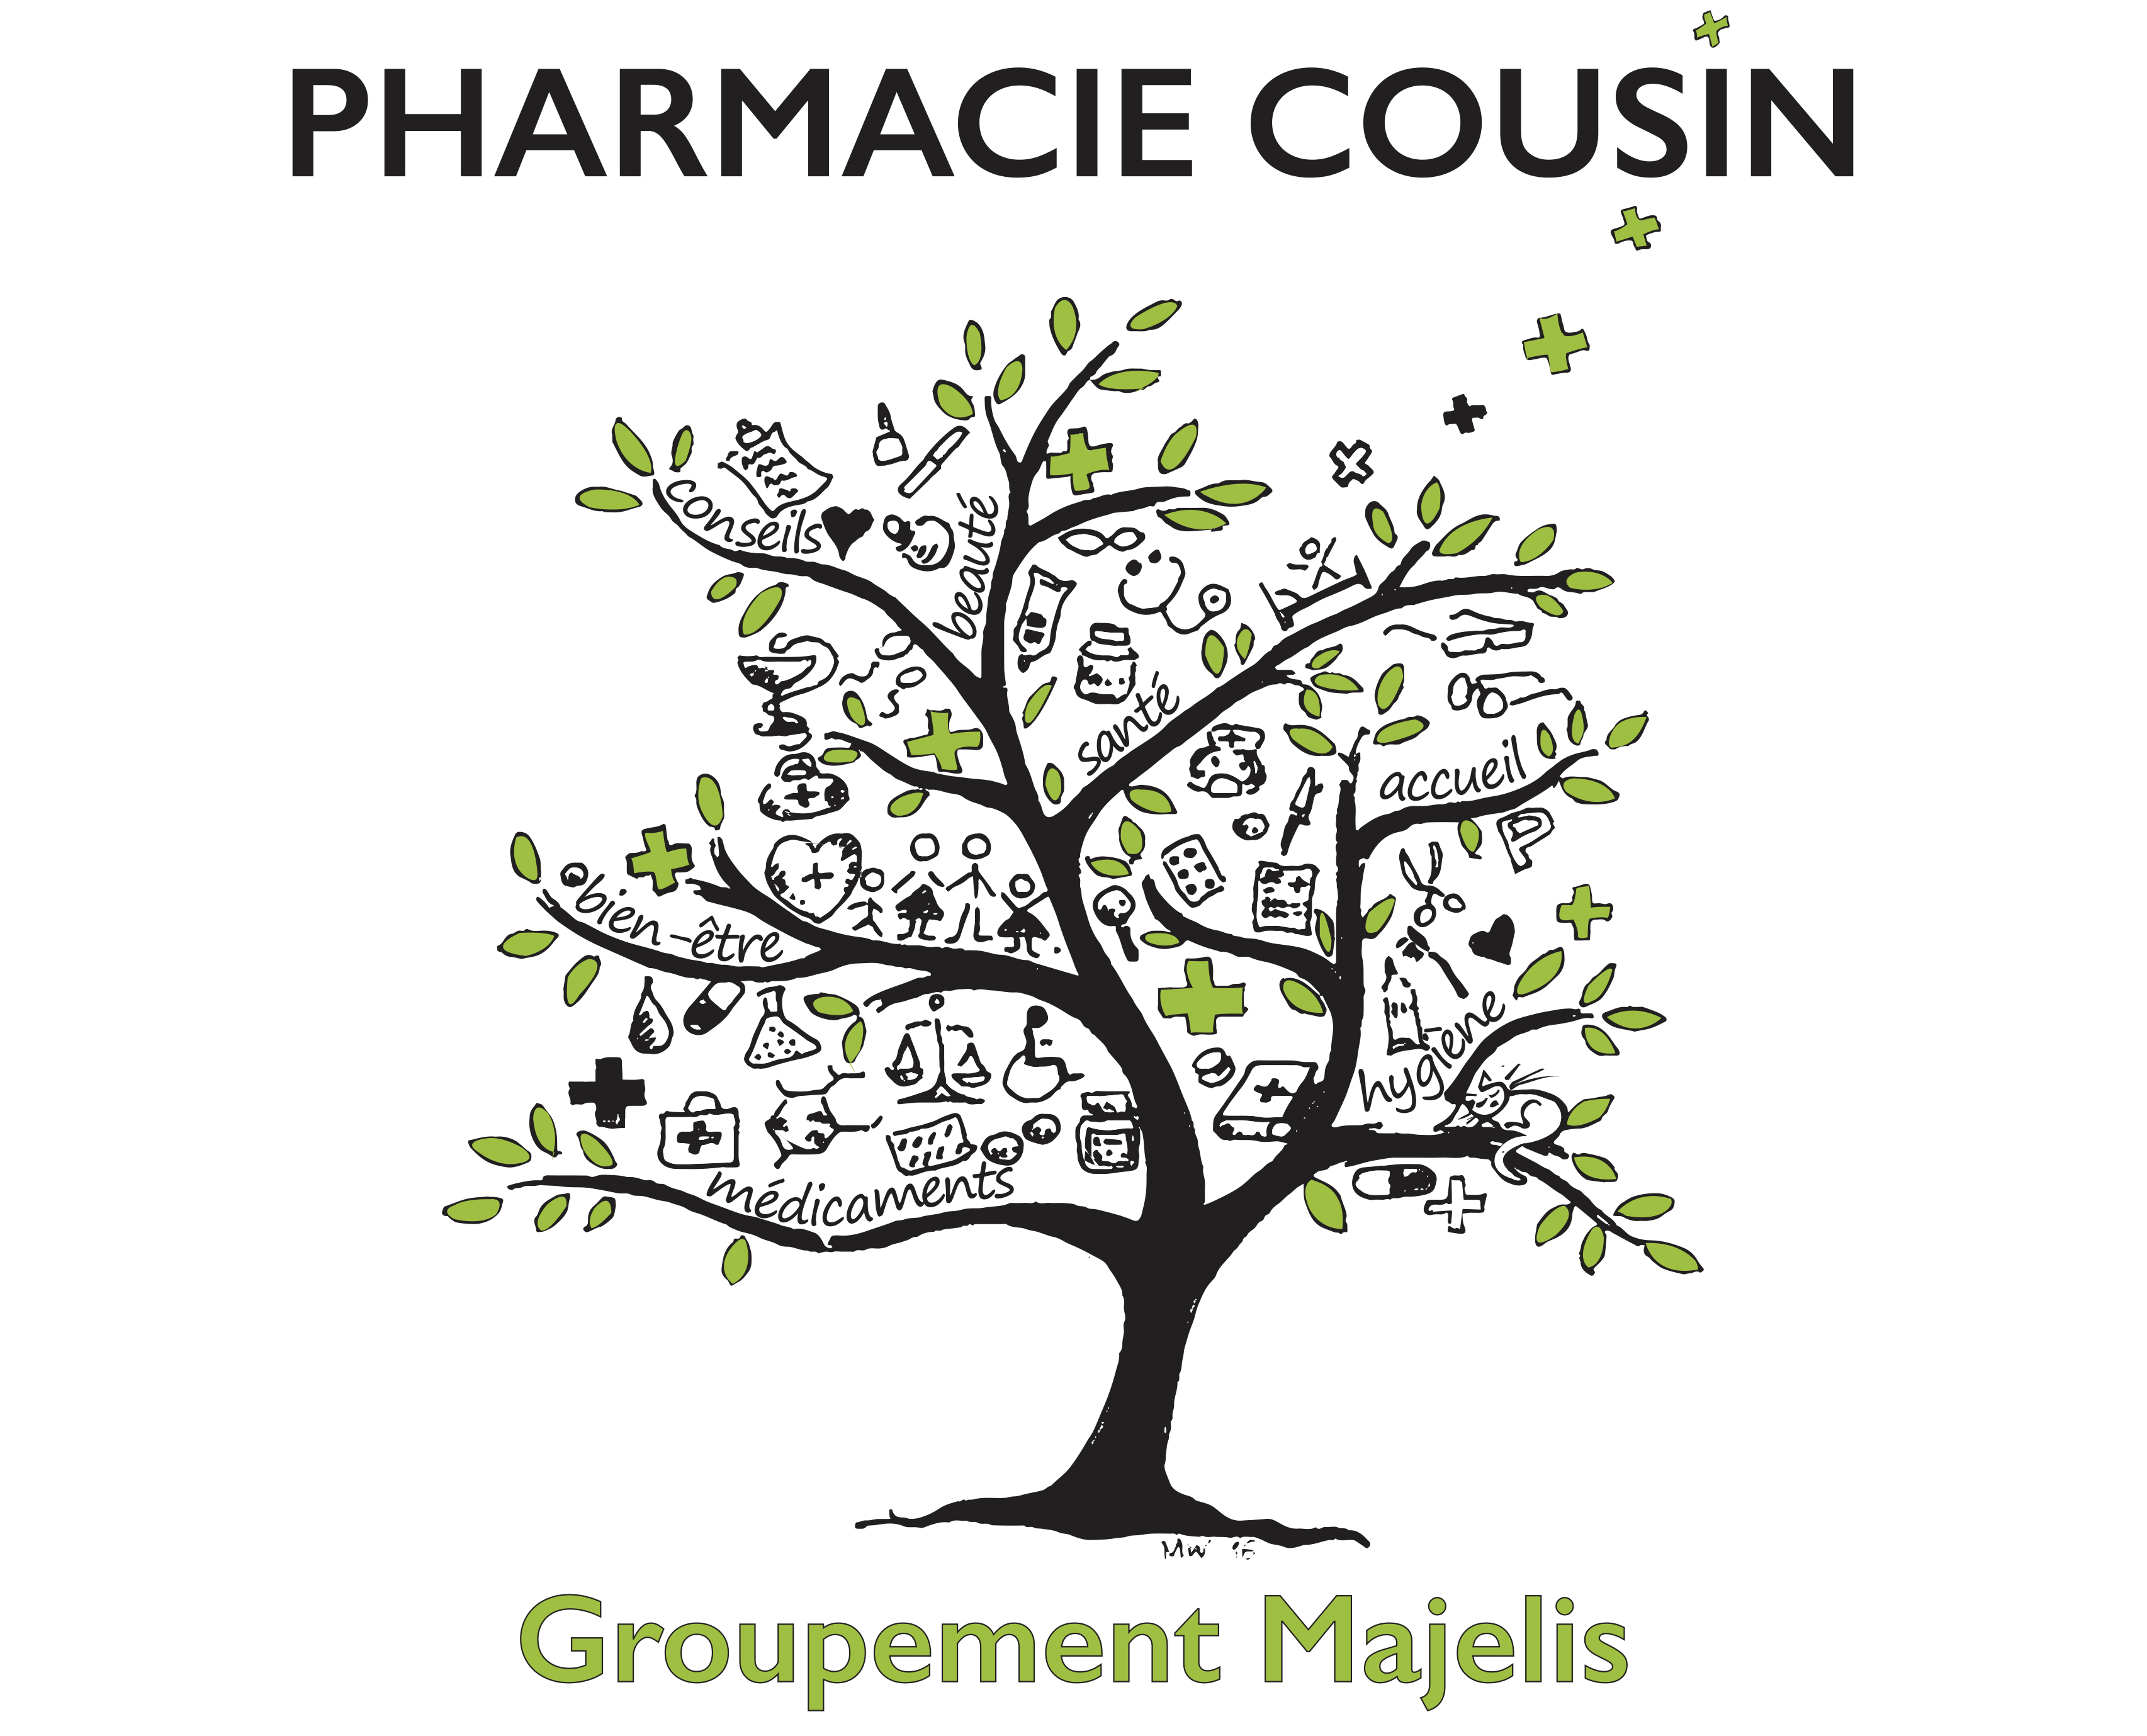 Pharmacie Cousin Groupement Majelis